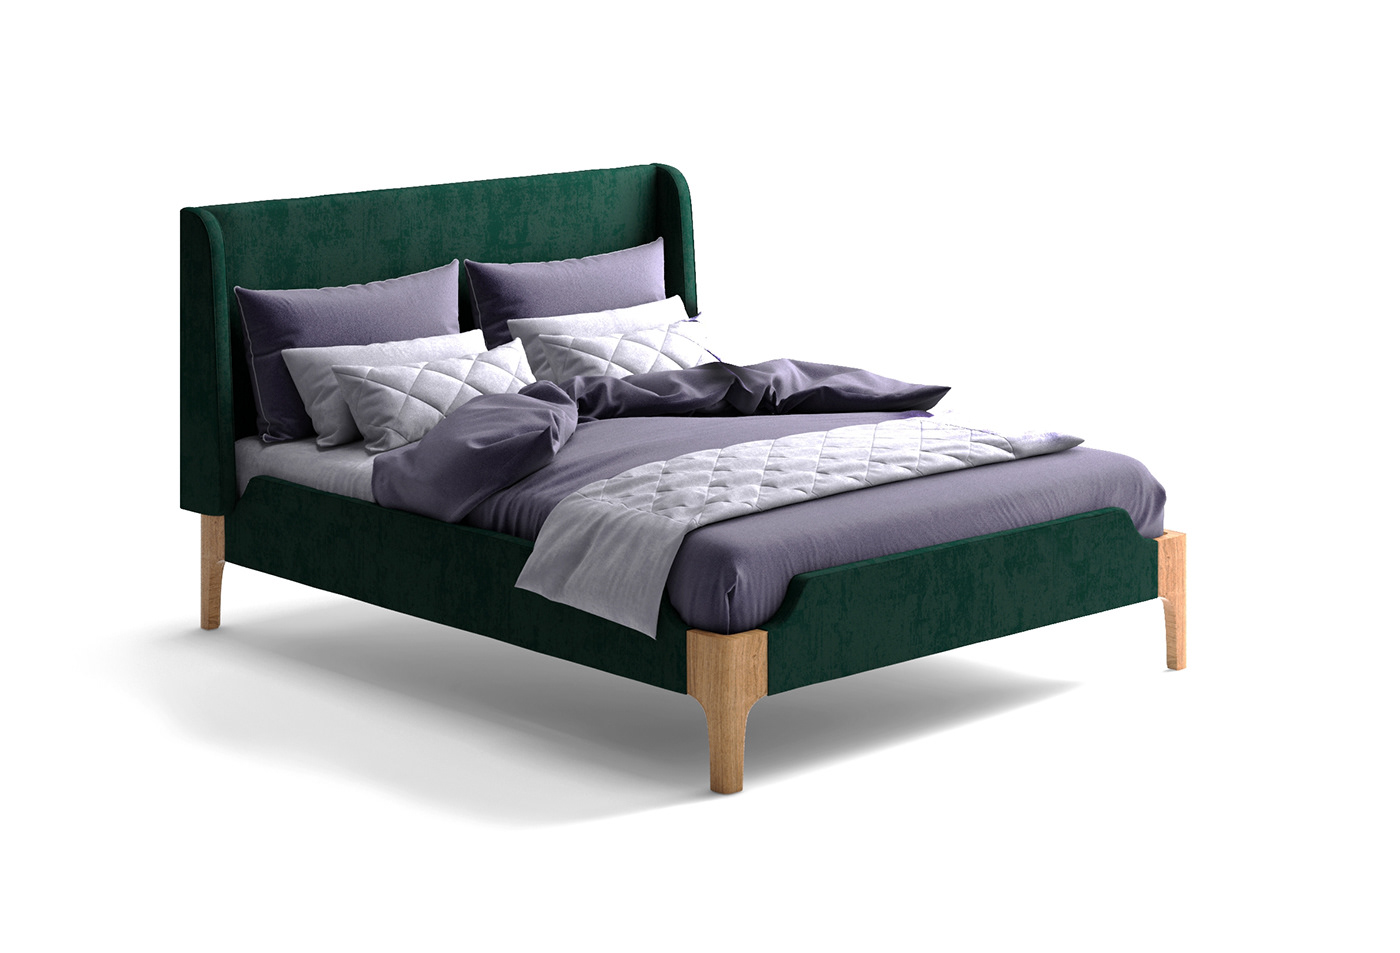 bed milan green wood modern fabric soft cover bedroom Interior furniture CGI 3drender 3D Modelling